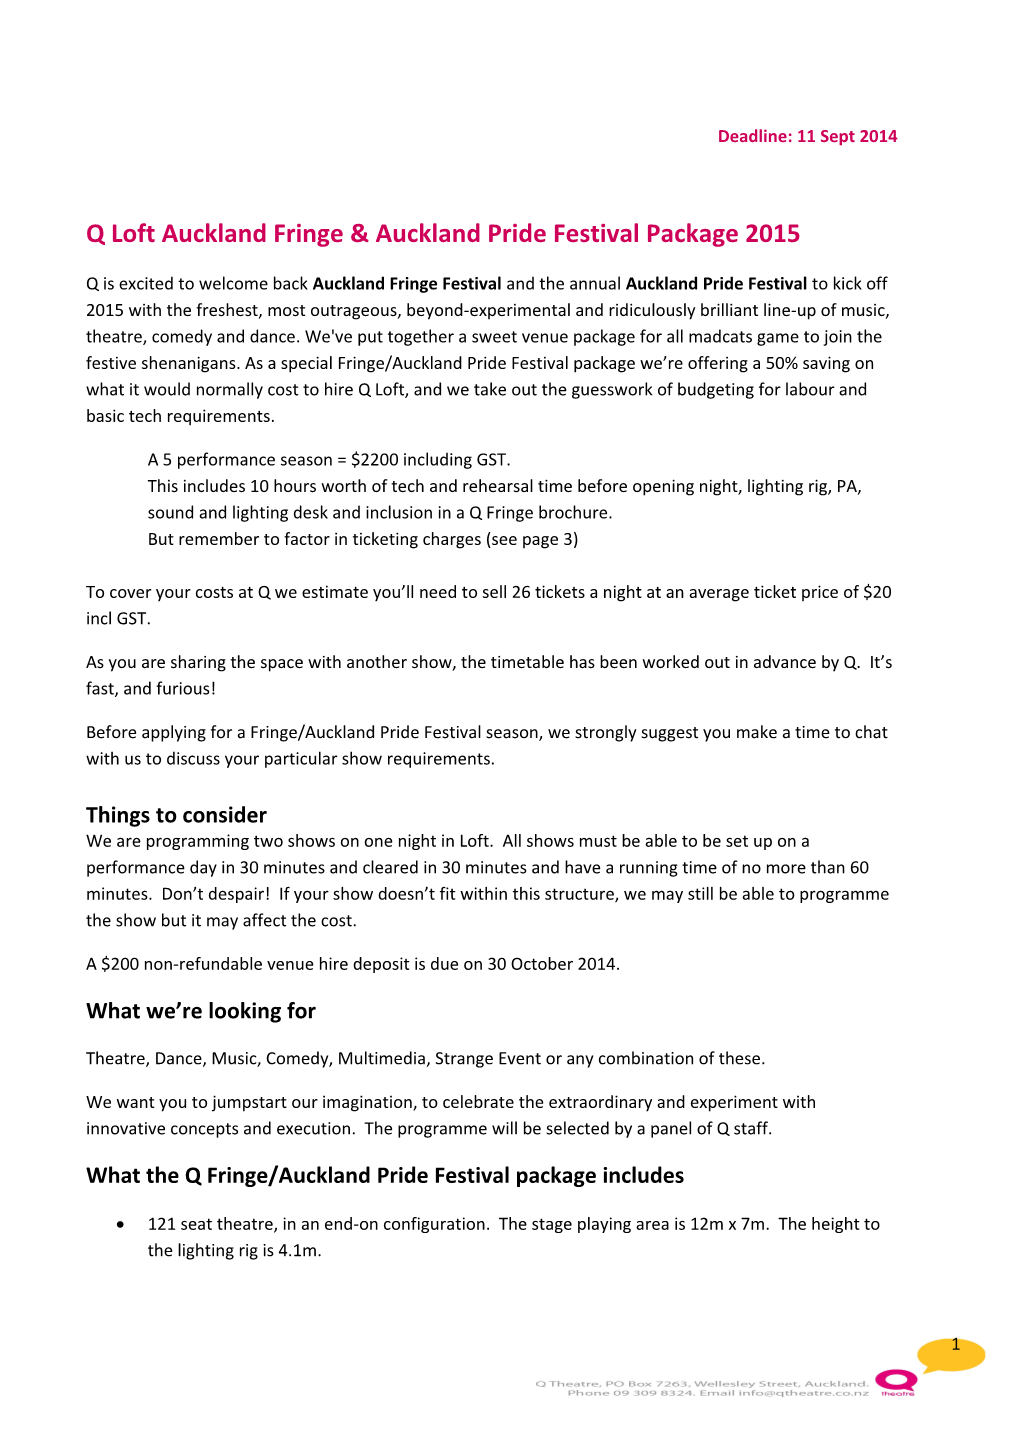 Q Loft Auckland Fringe & Auckland Pride Festival Package 2015